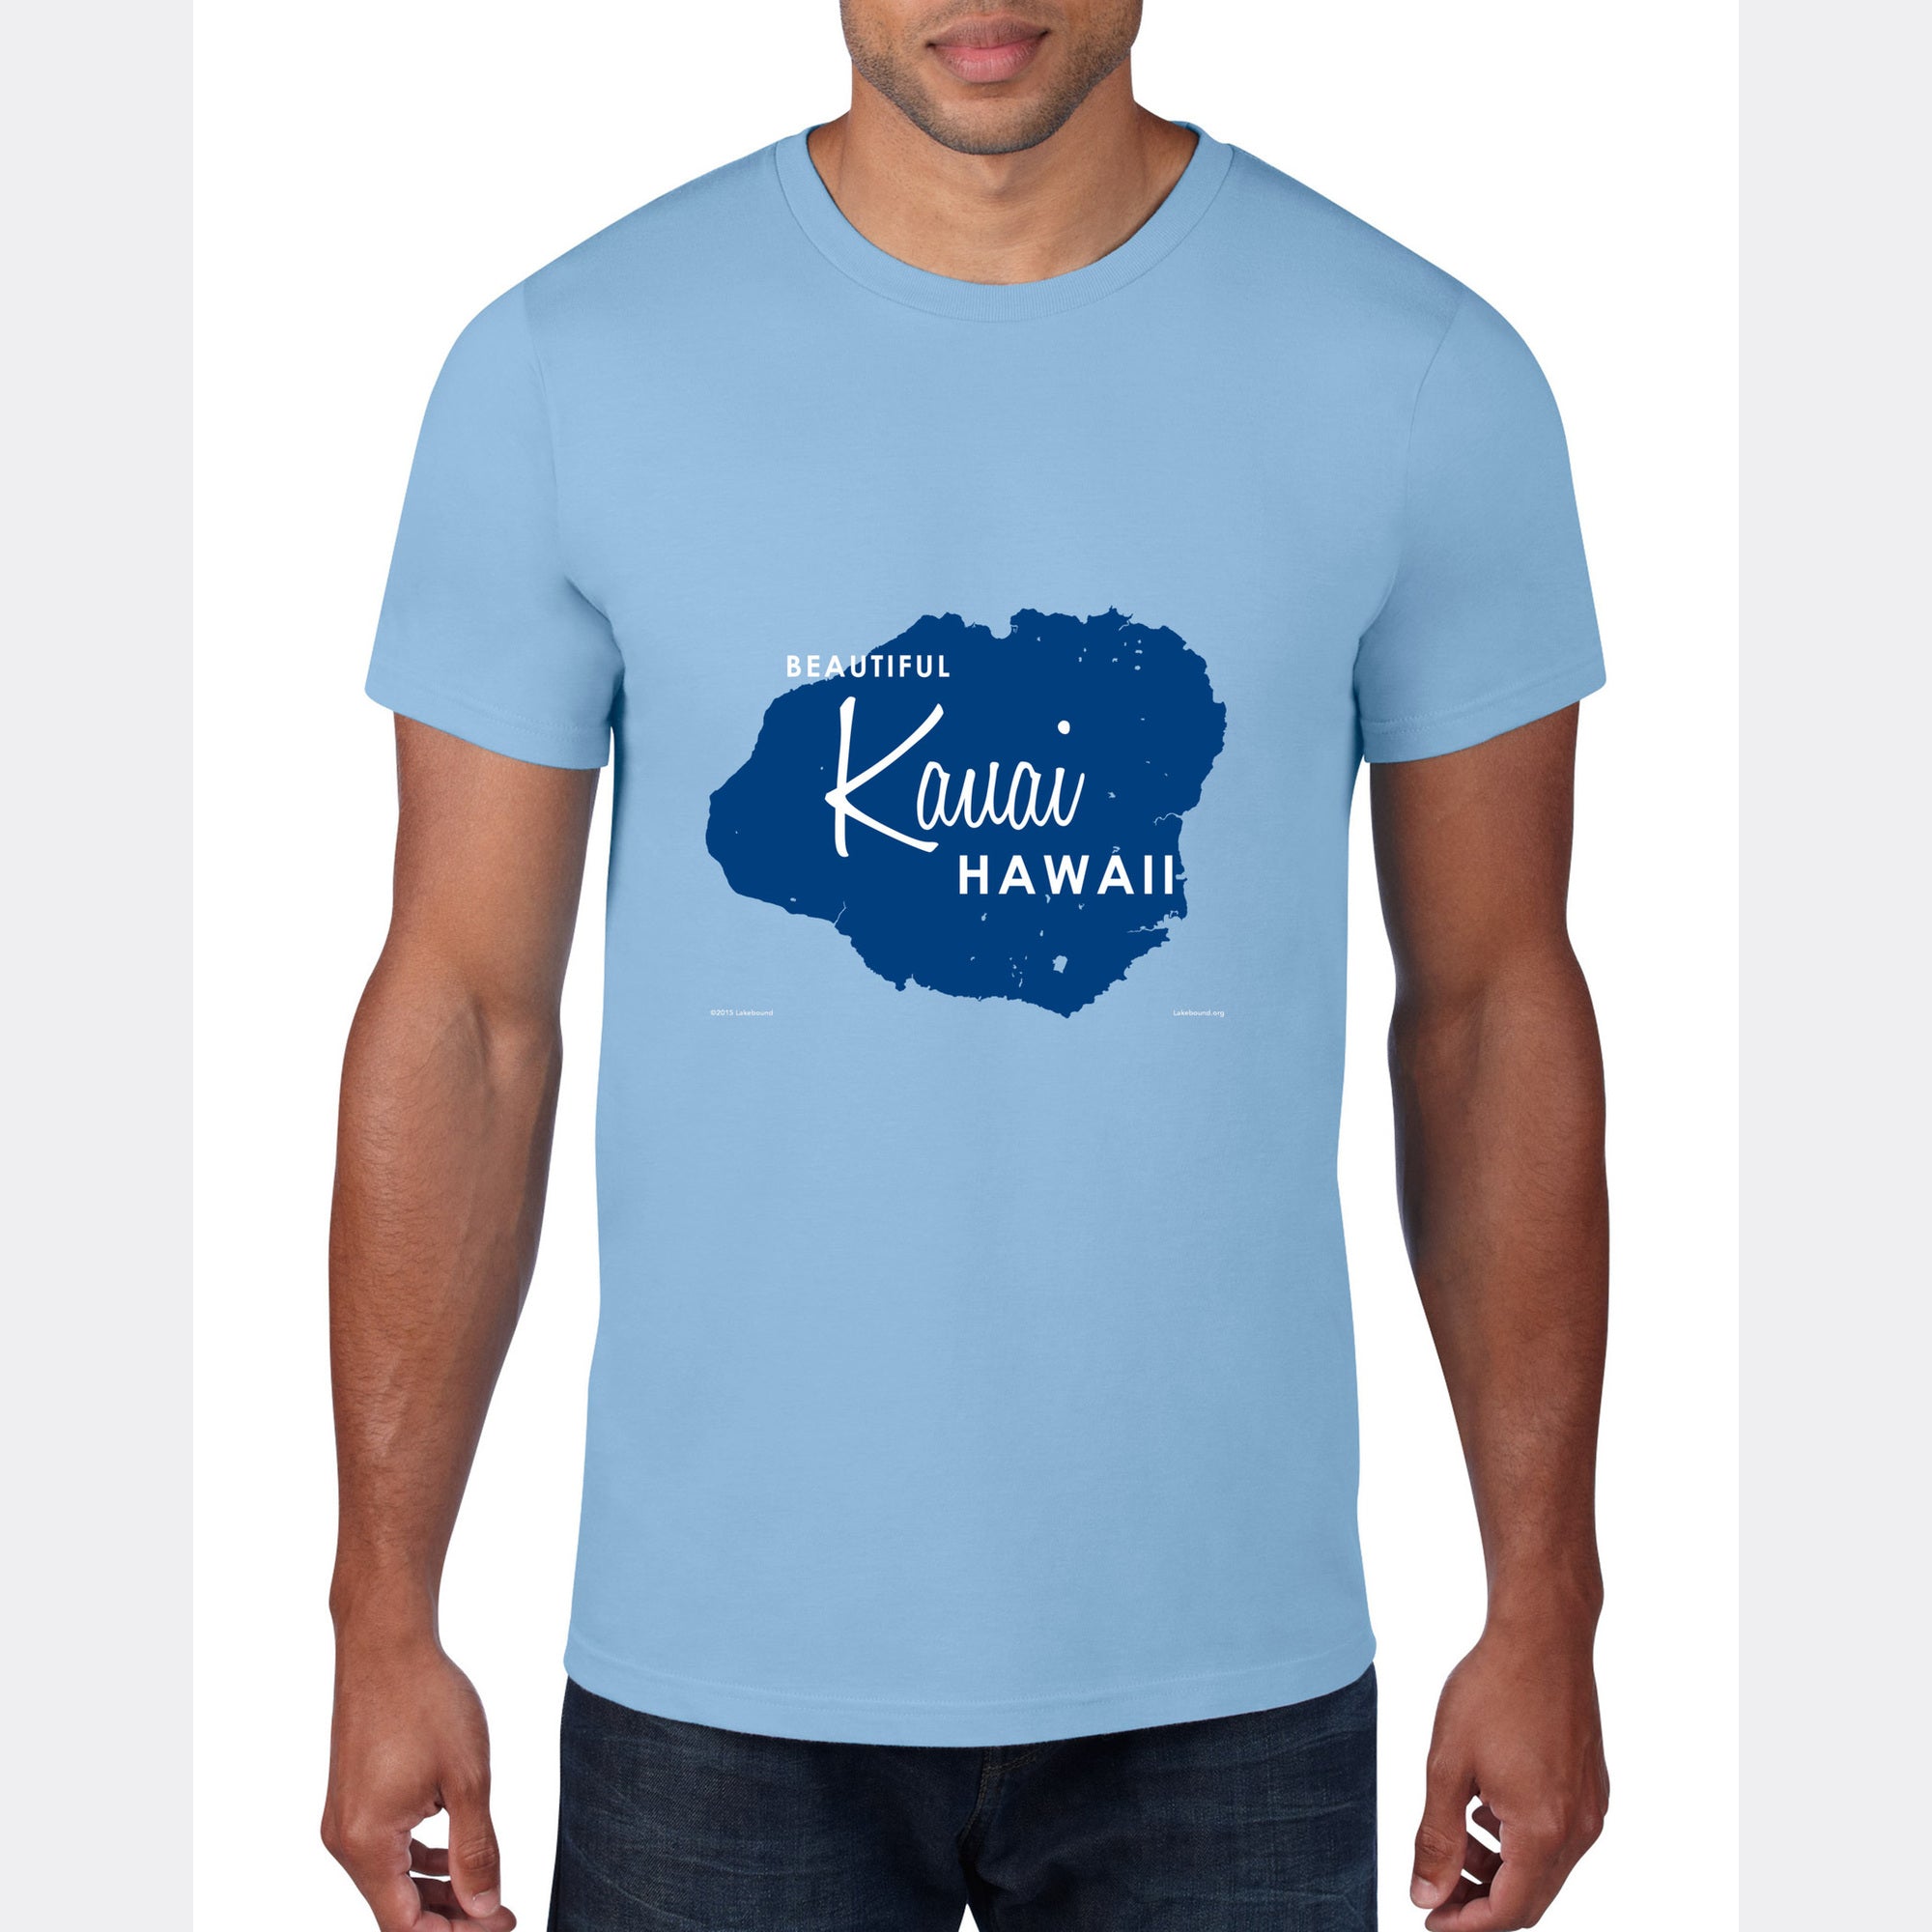 Kauai Hawaii, T-Shirt